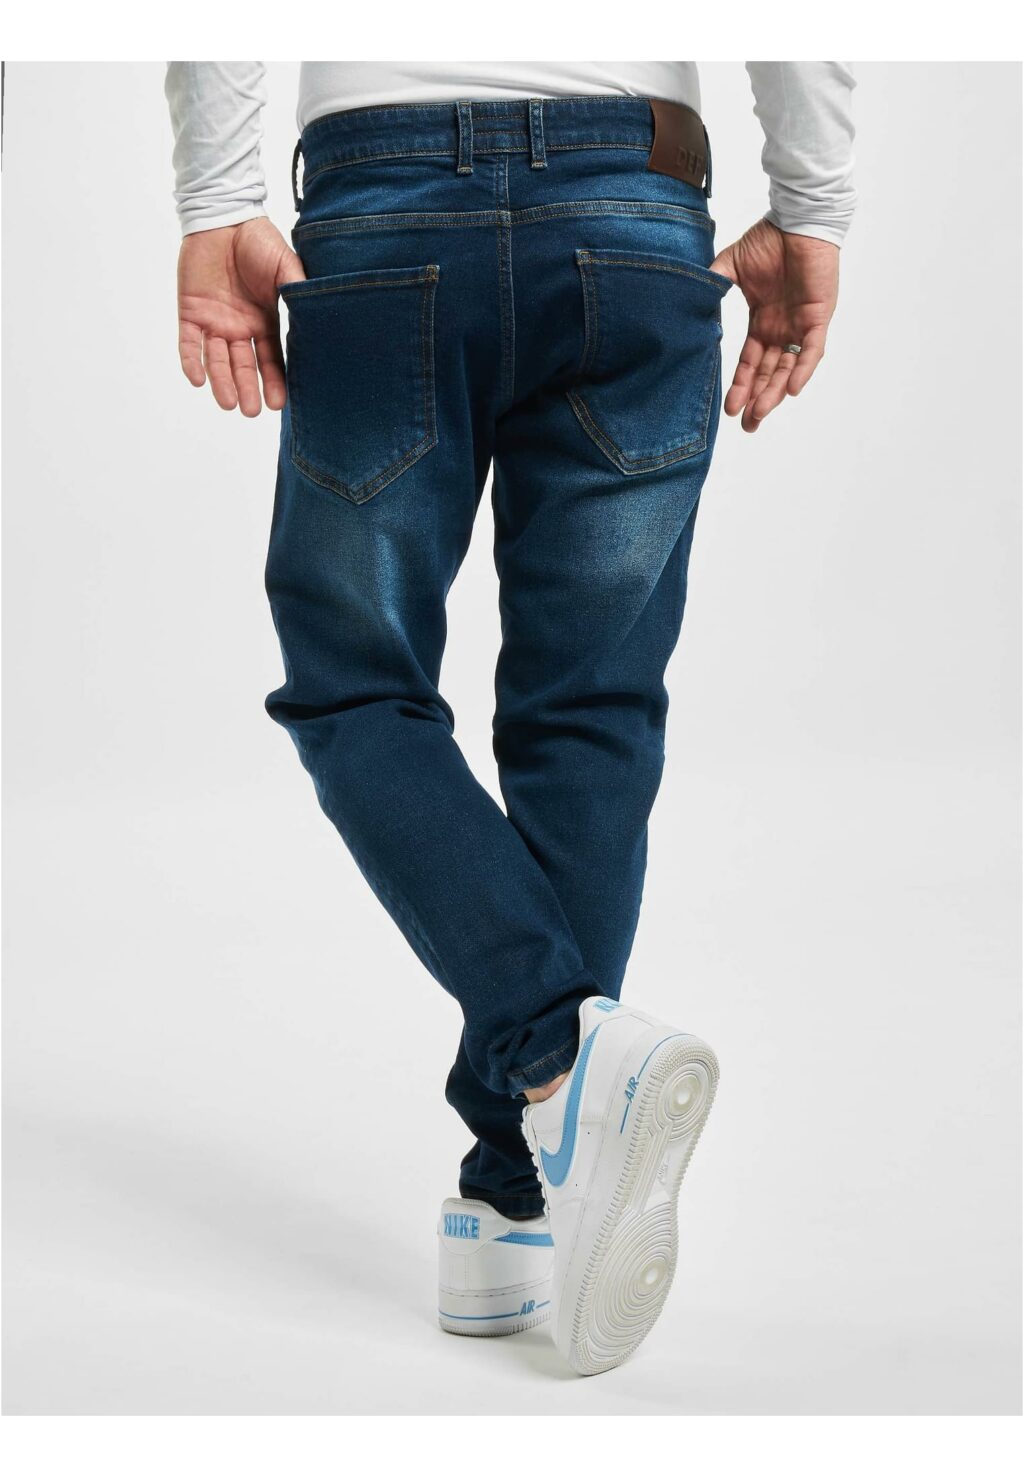 Refik Slim Fit Jeans blue DFJS215